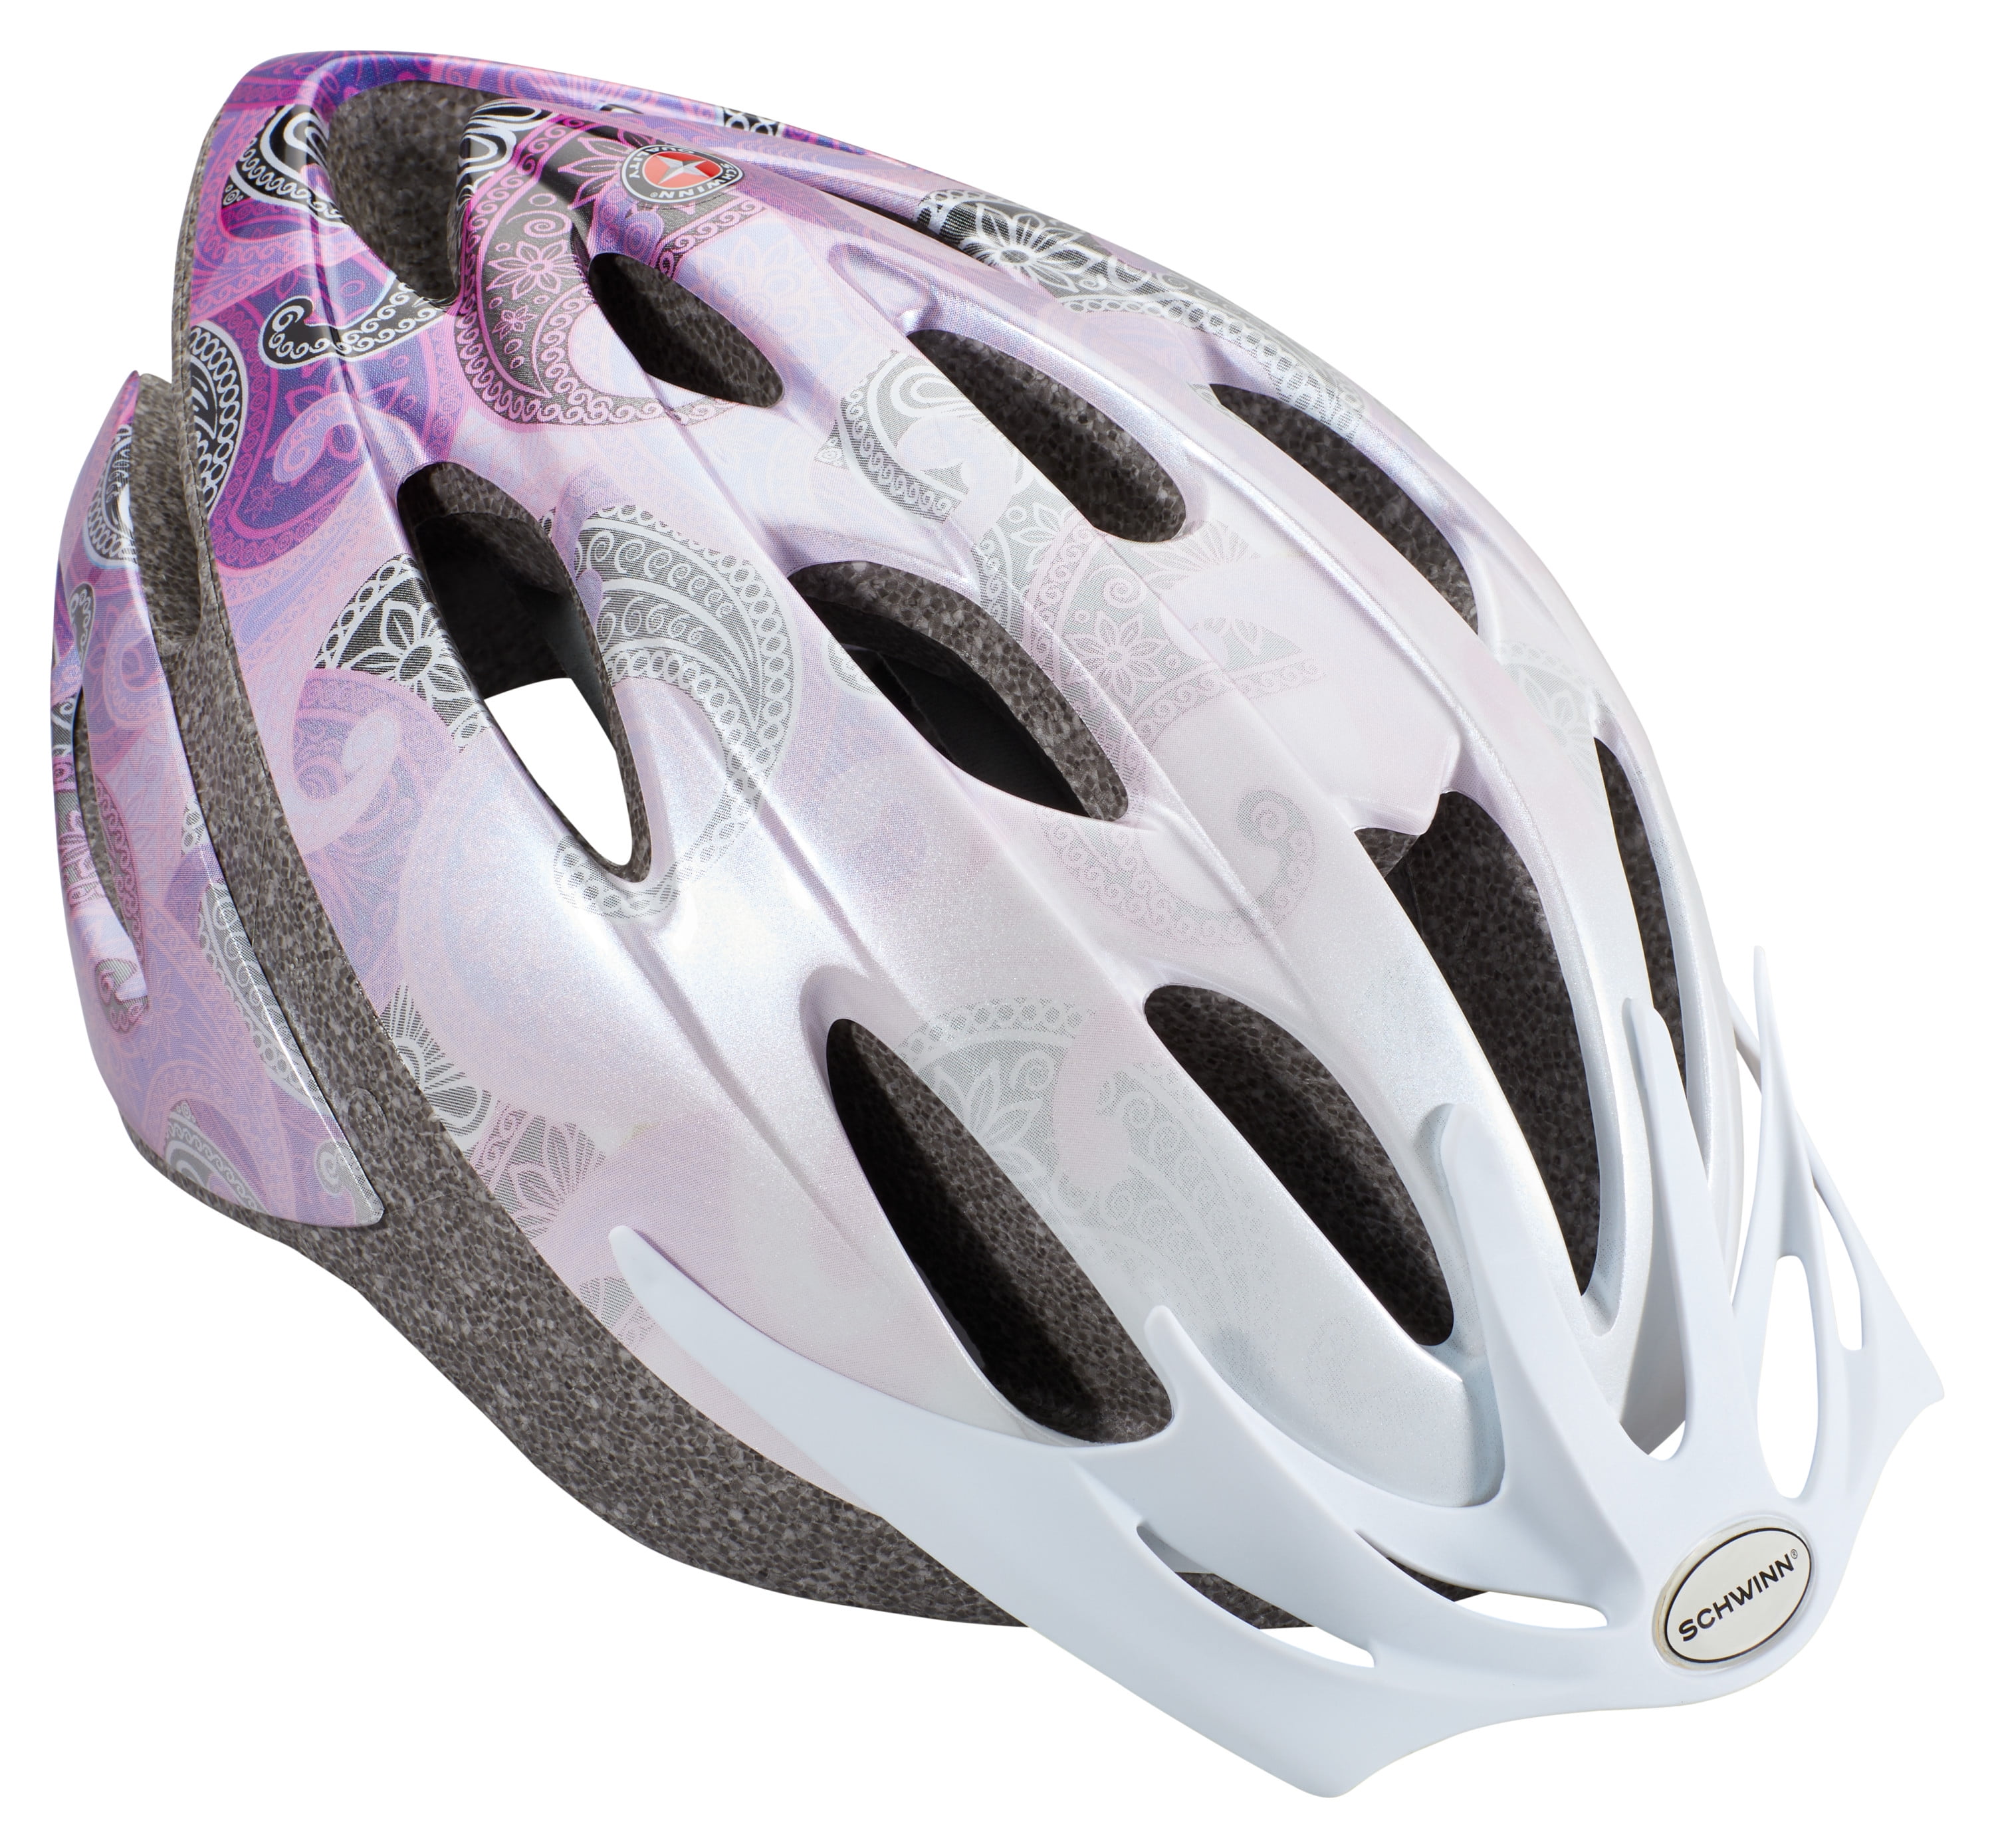 NEW! Schwinn Thrasher Adjustable Adult Bicycle Helmet Head Protection Age 14 